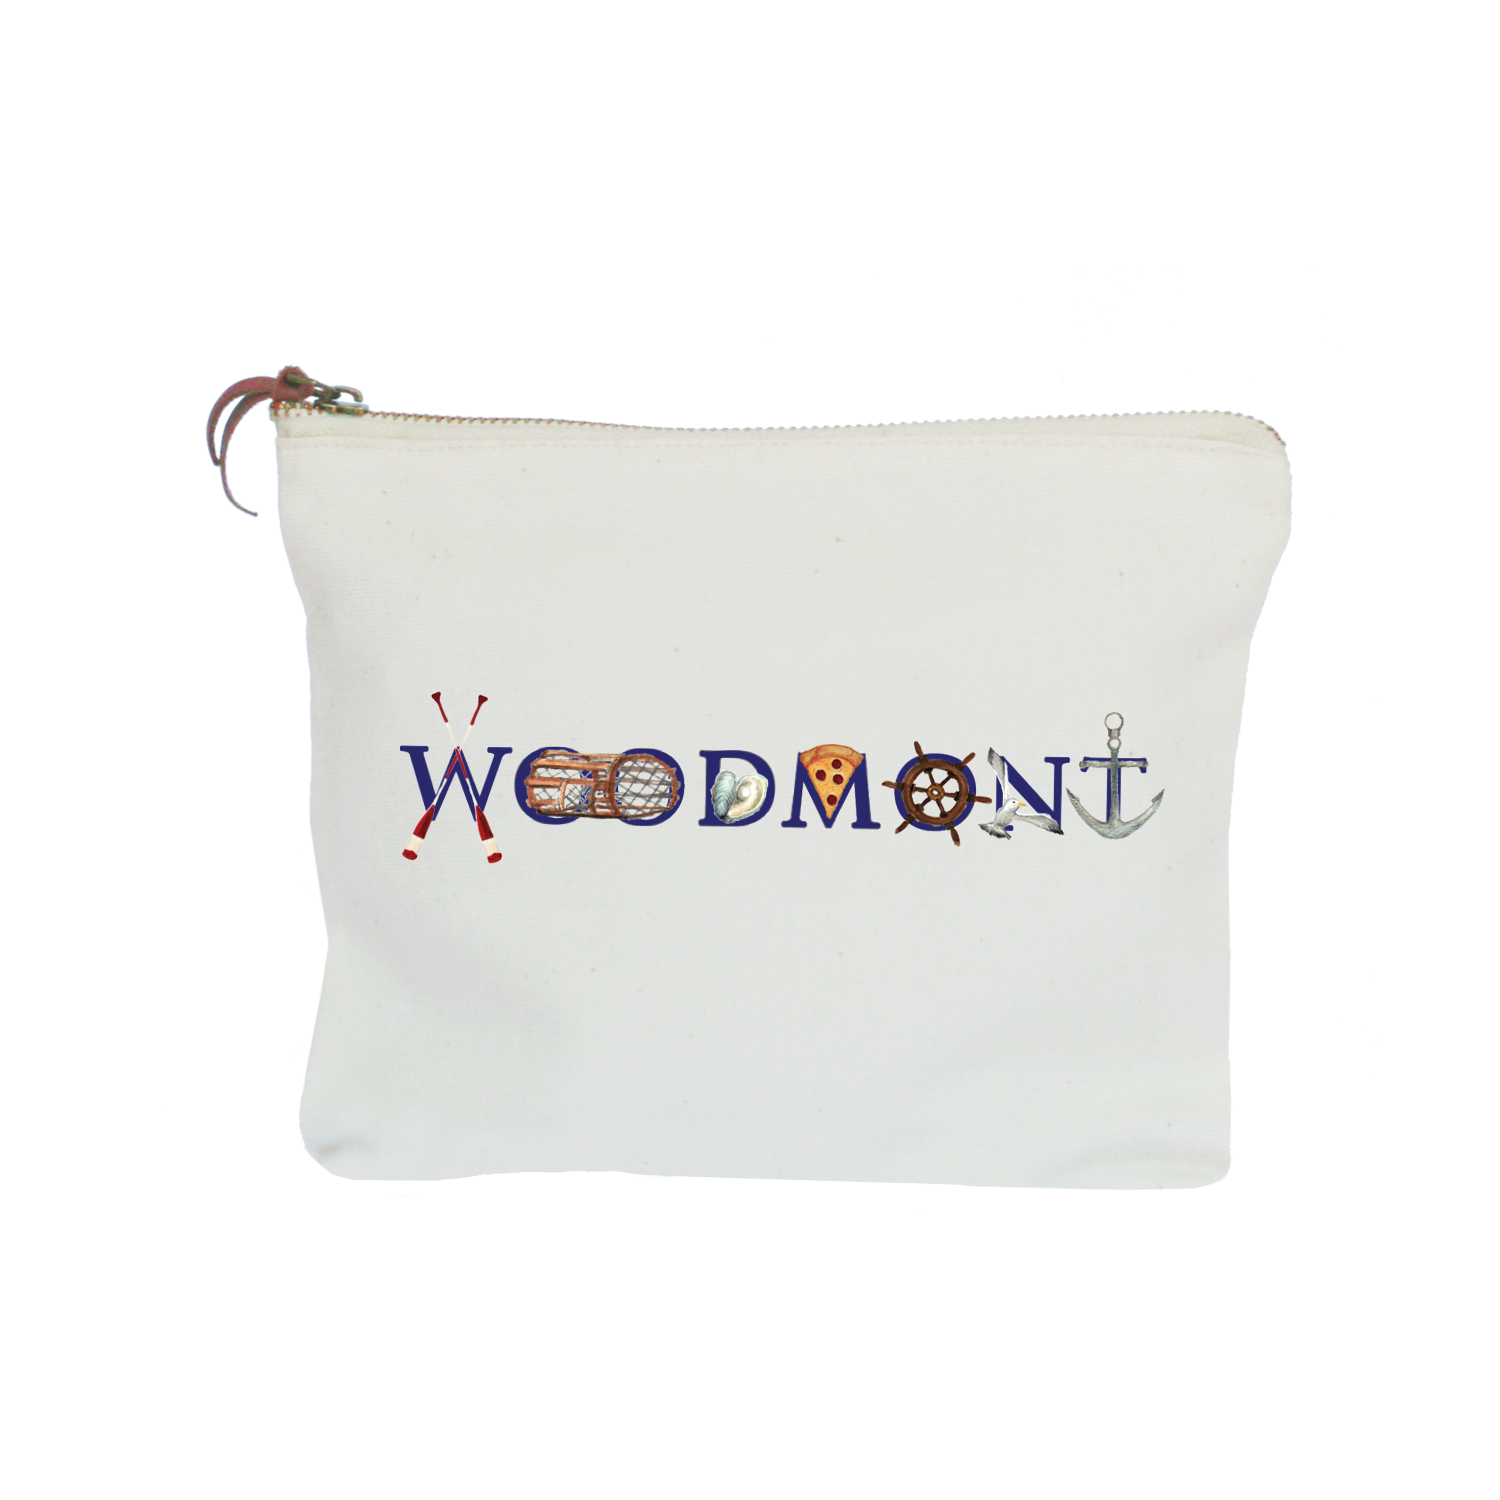 woodmont zipper pouch